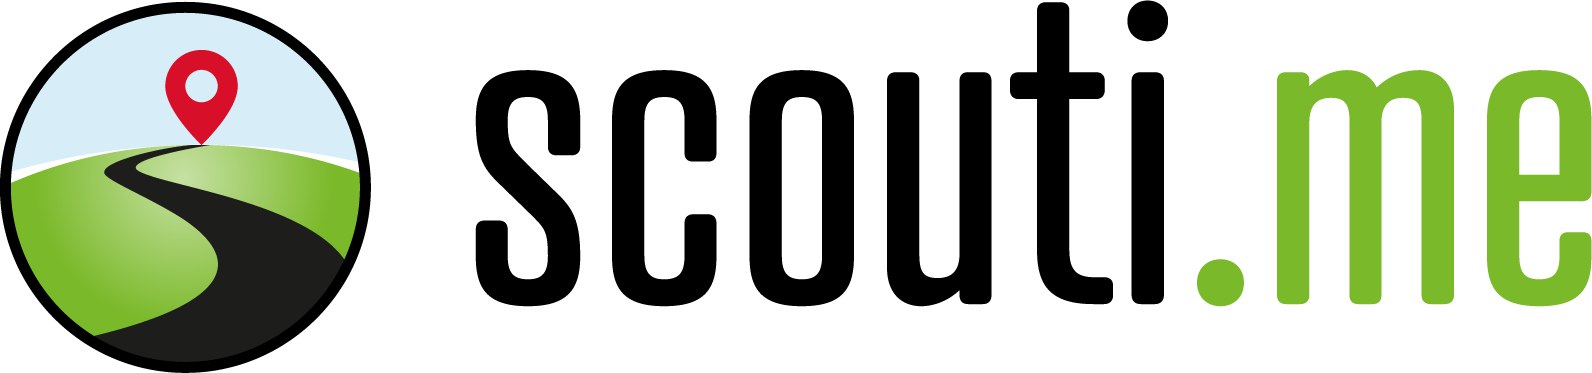 scouti.me Logo, Design: Samuel Janzen